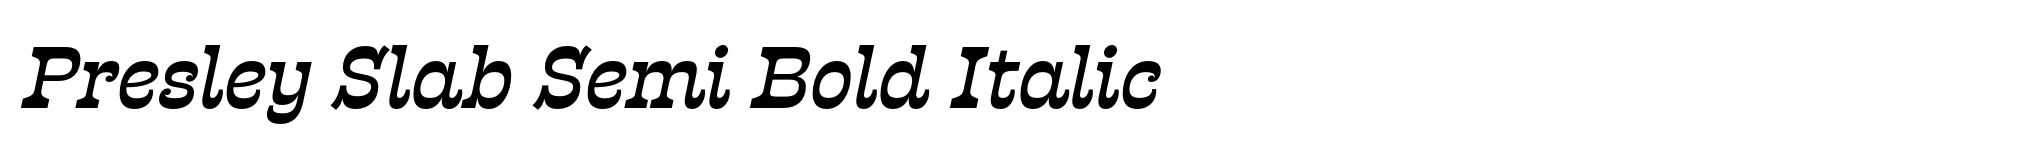 Presley Slab Semi Bold Italic image